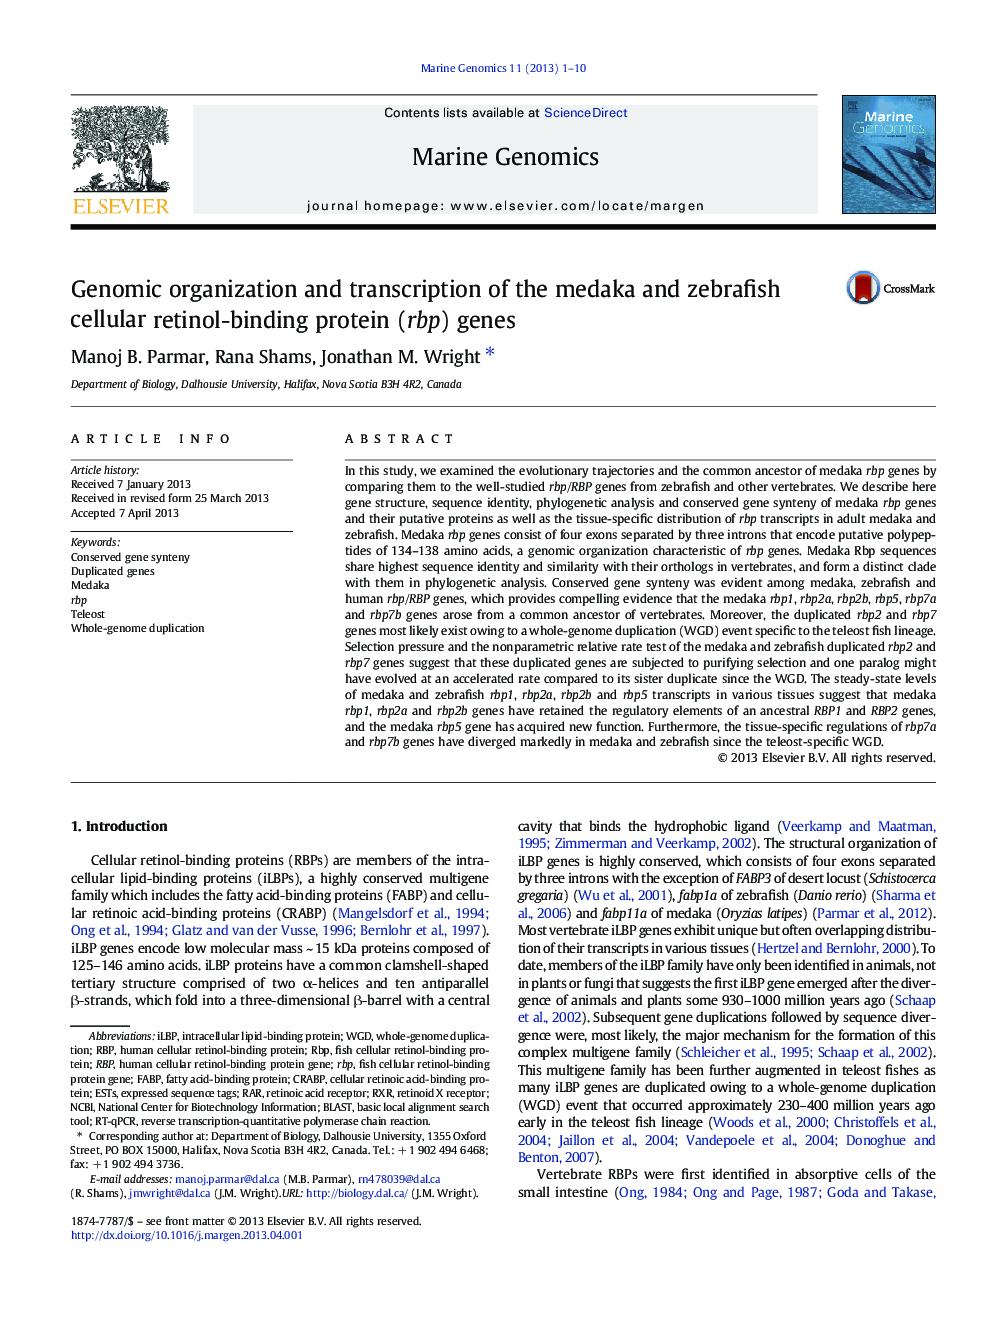 Genomic organization and transcription of the medaka and zebrafish cellular retinol-binding protein (rbp) genes